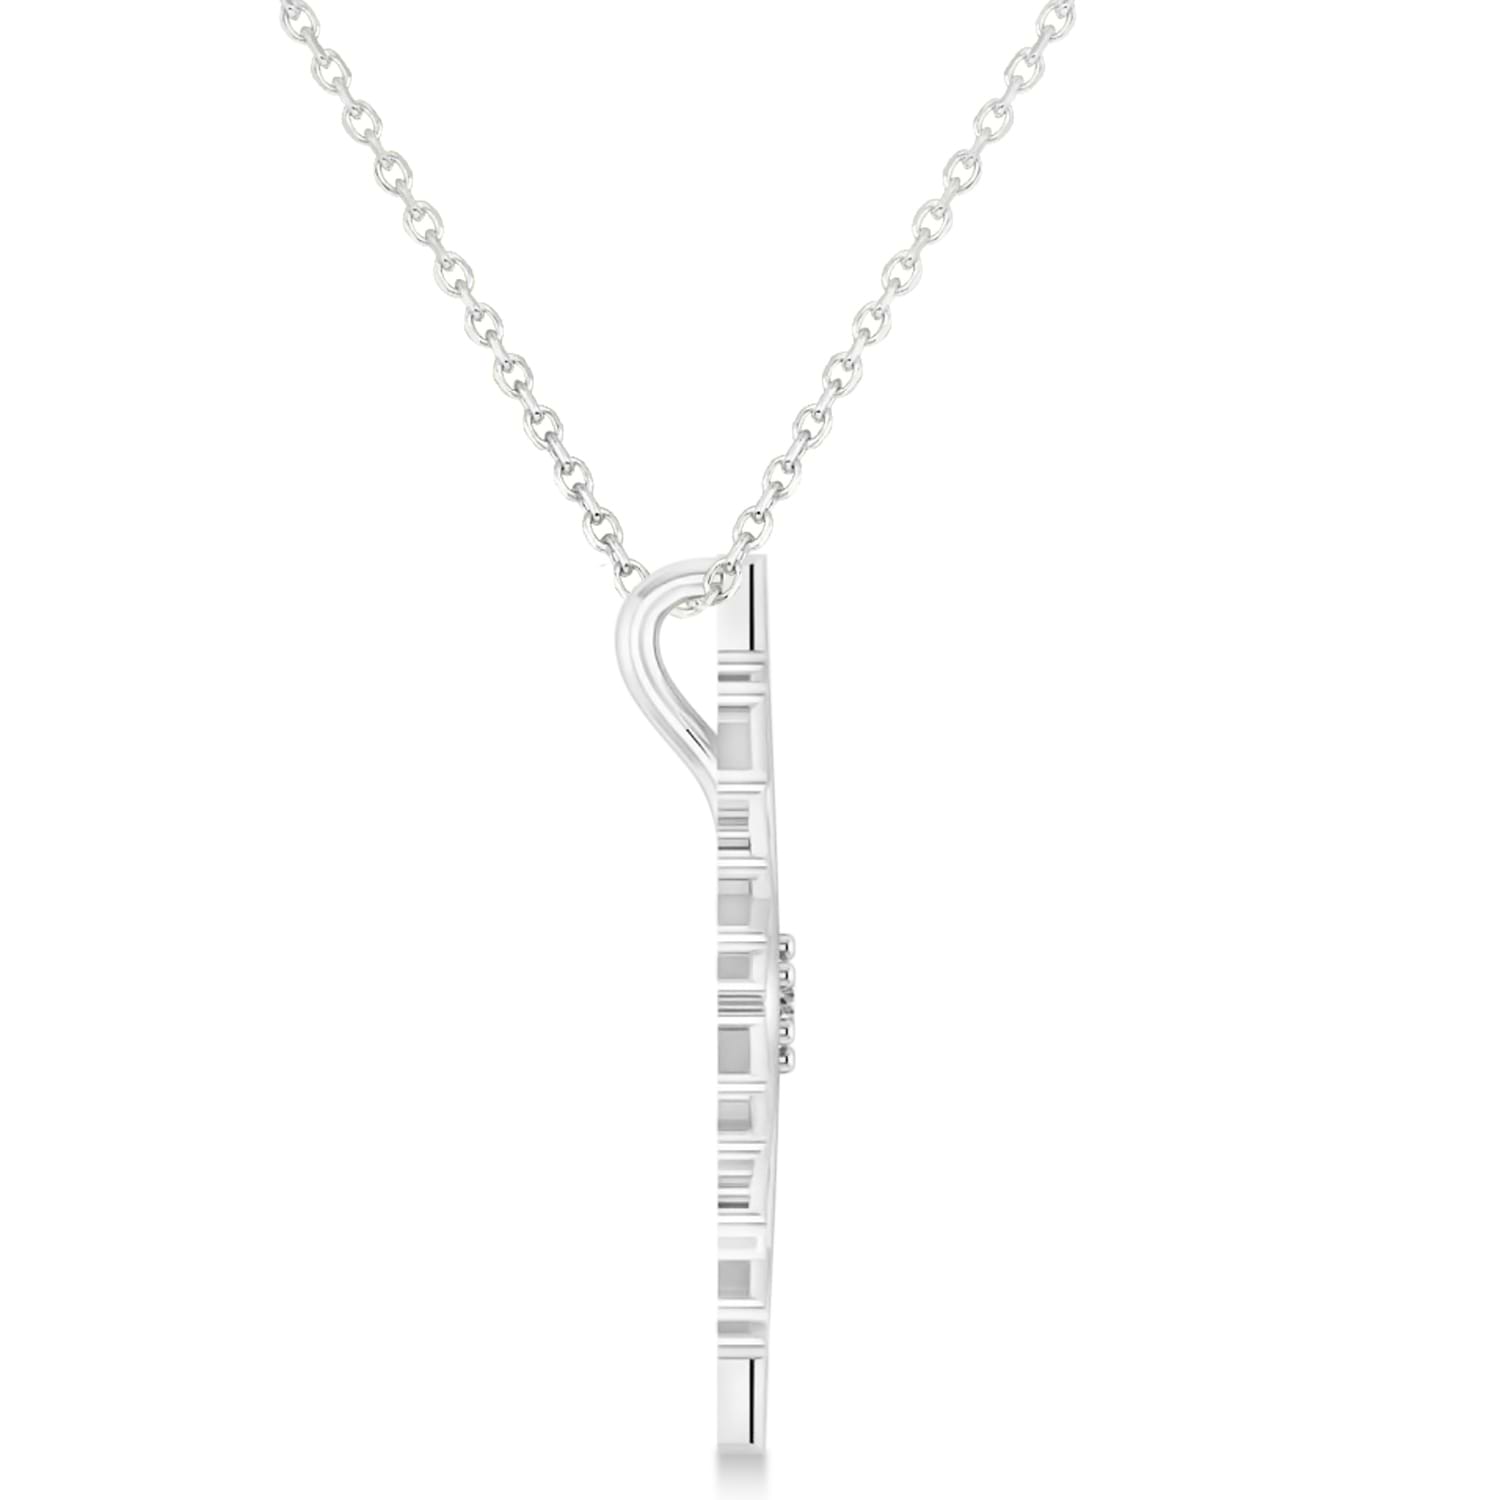 Diamond Wintertime Snowflake Pendant Necklace 14k White Gold (0.04ct)